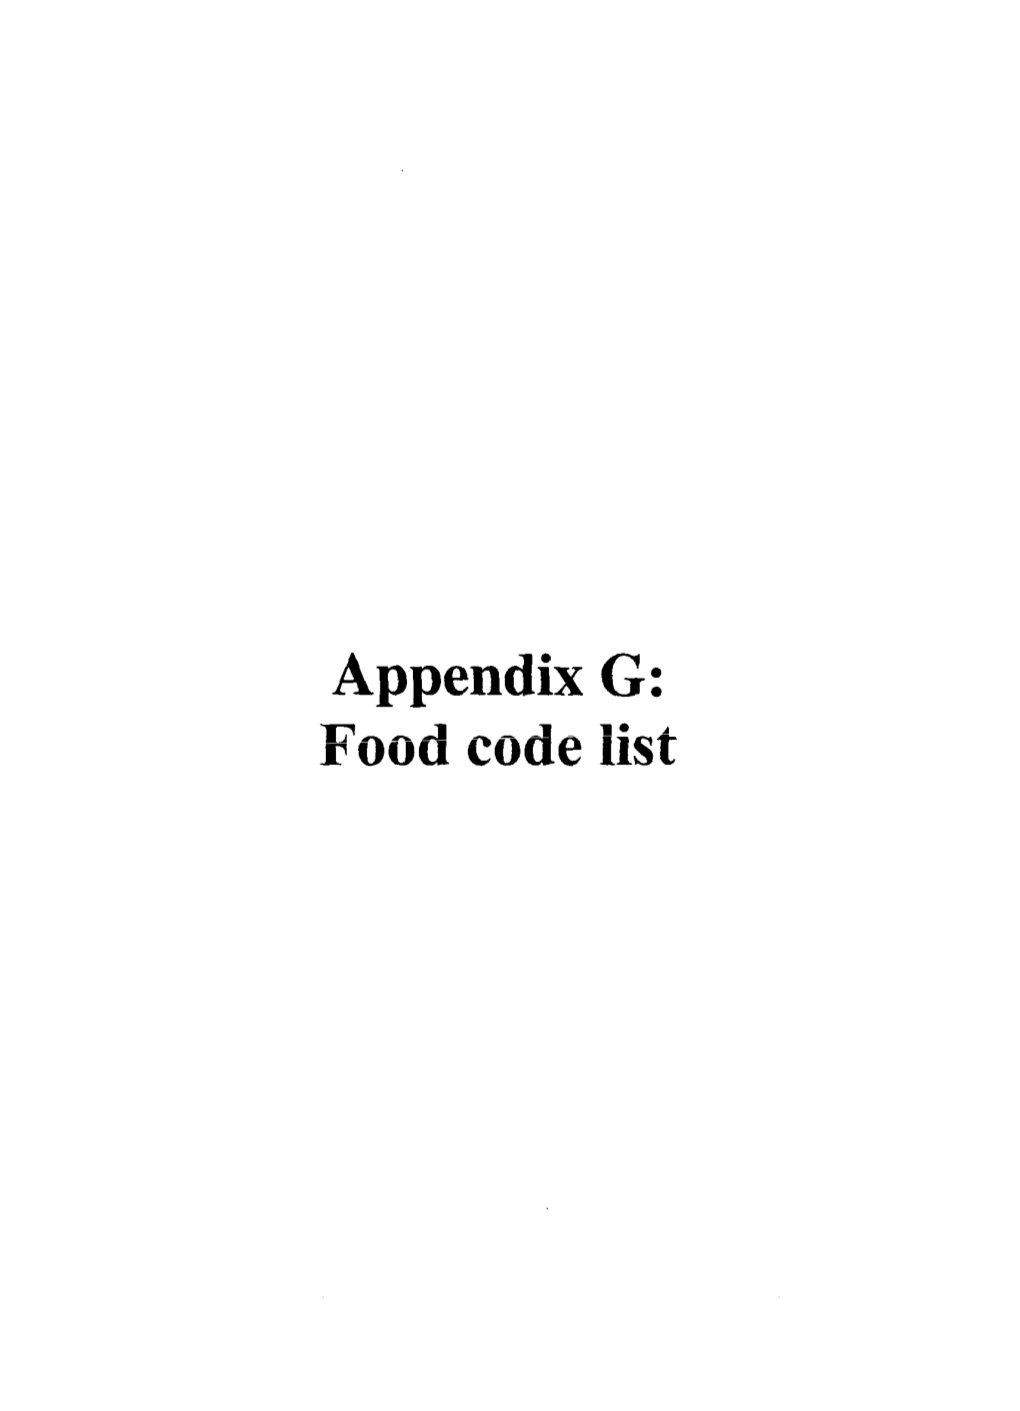 Food Code Iist NDNS FOOD CODE LIST - CONTENTS